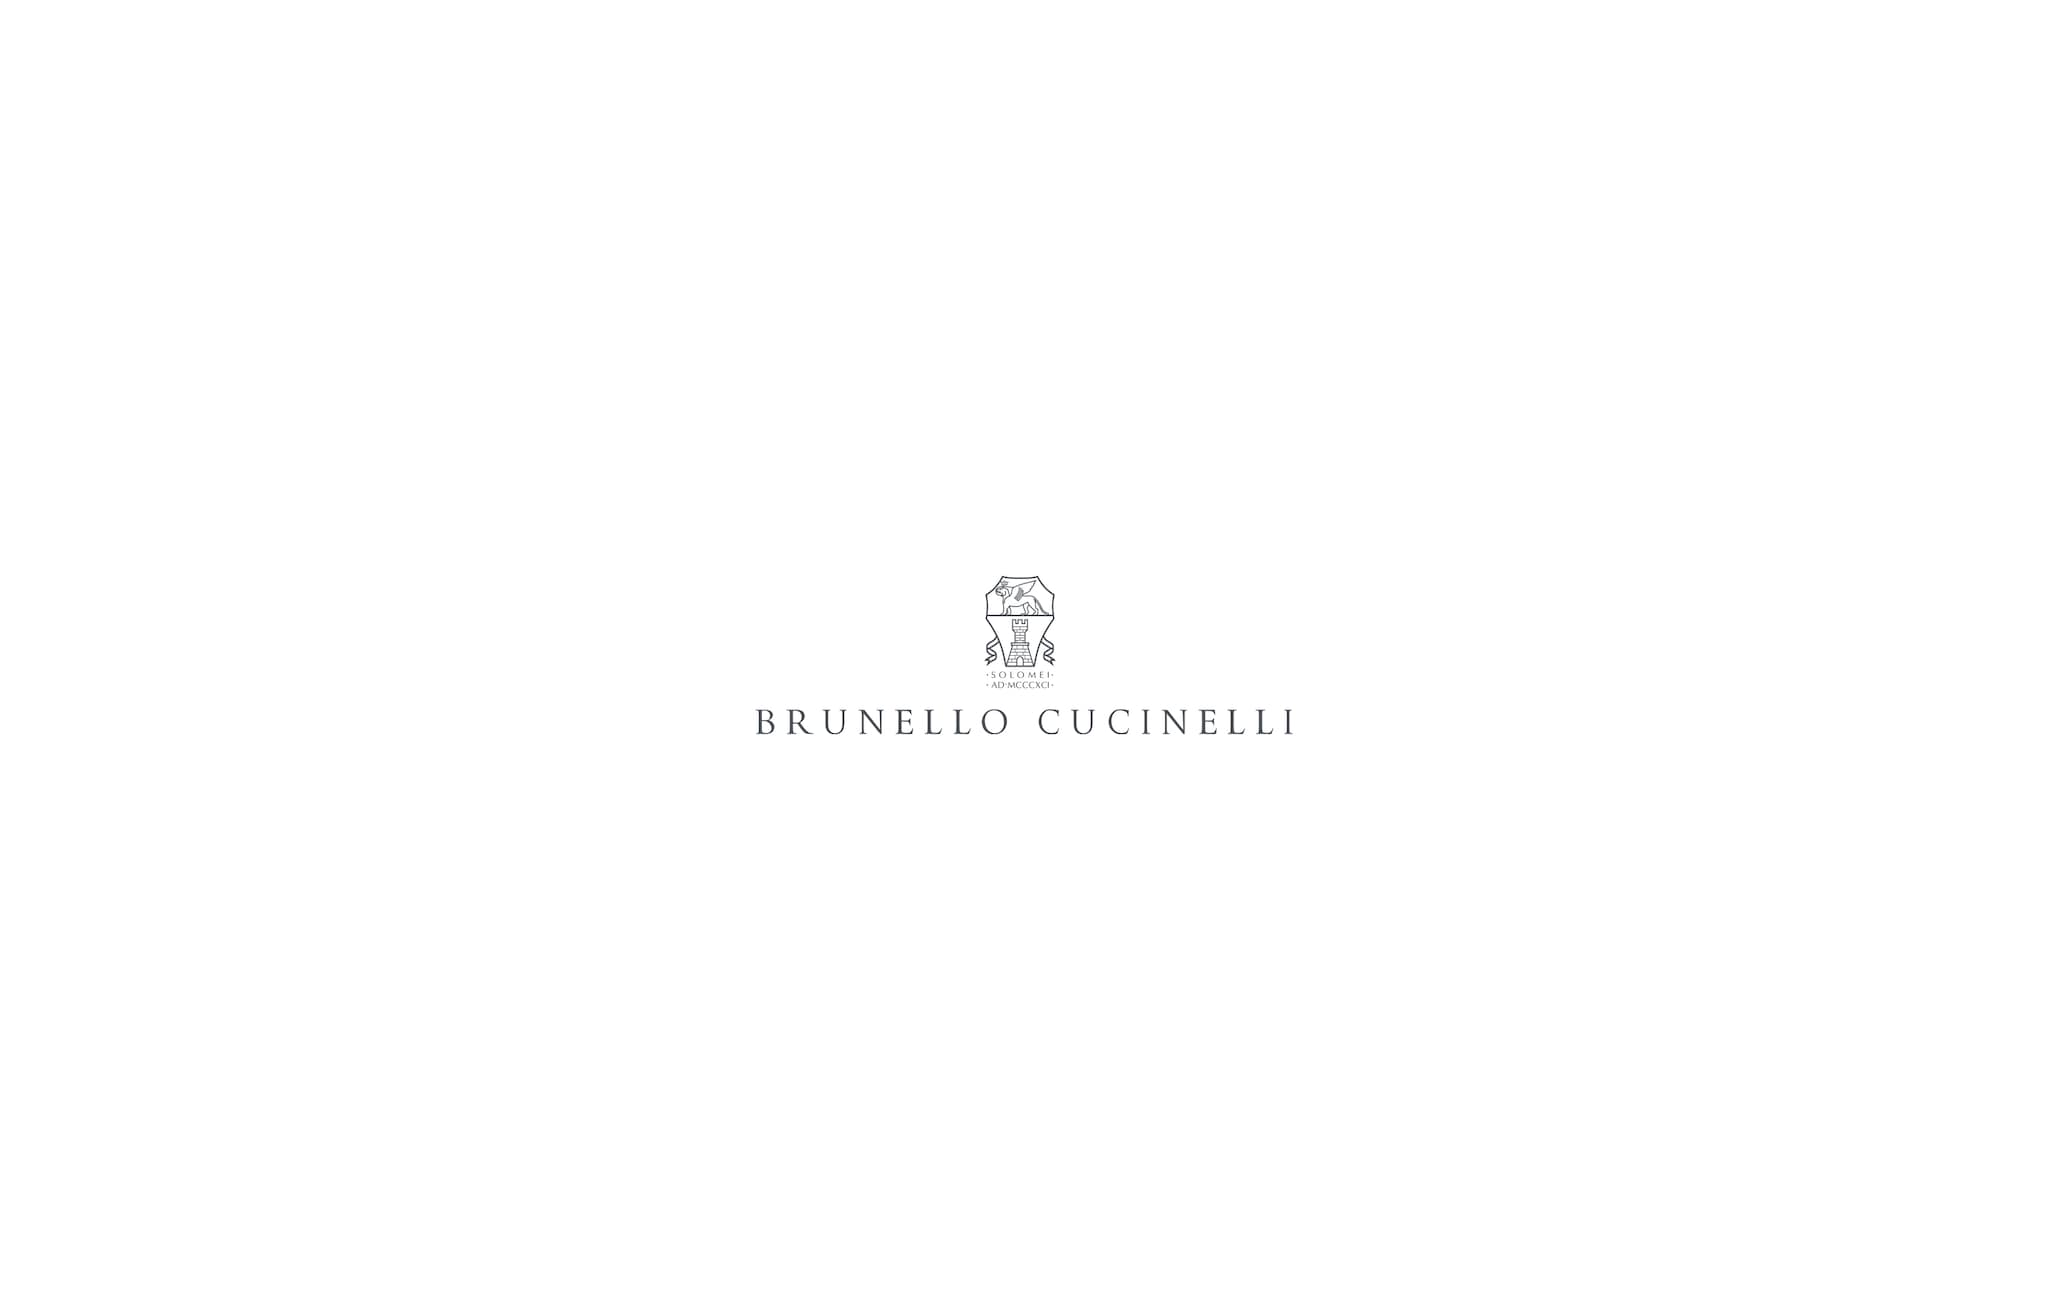 One-and-a-half breasted blazer null Man - Brunello Cucinelli